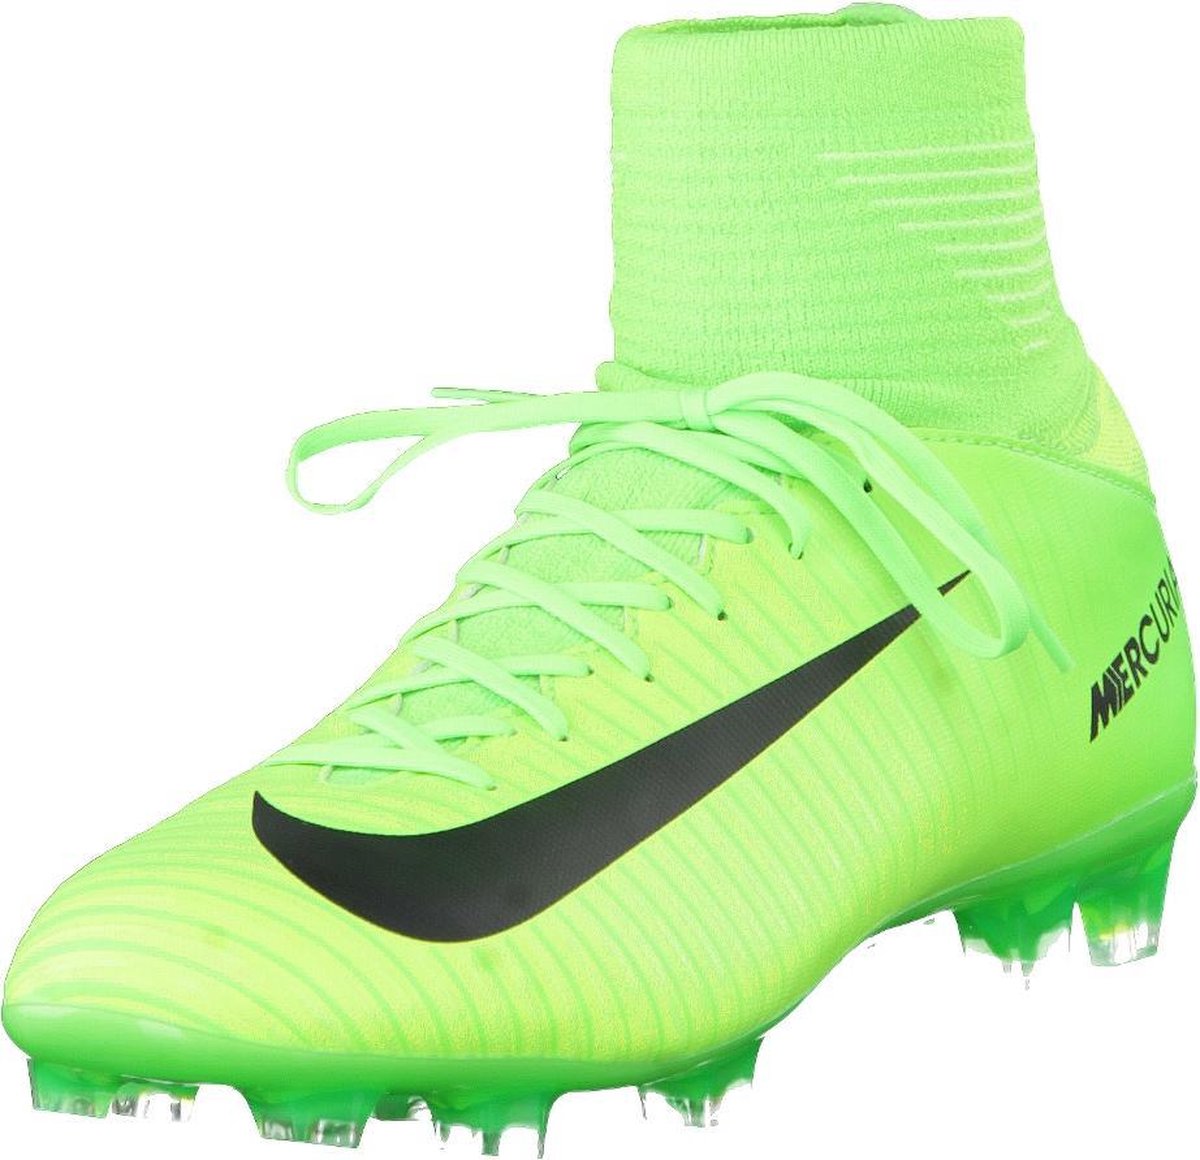 Prooi straal adelaar Nike Voetbalschoenen - Electric Green/Black-Flash Lime-White - 38 | bol.com